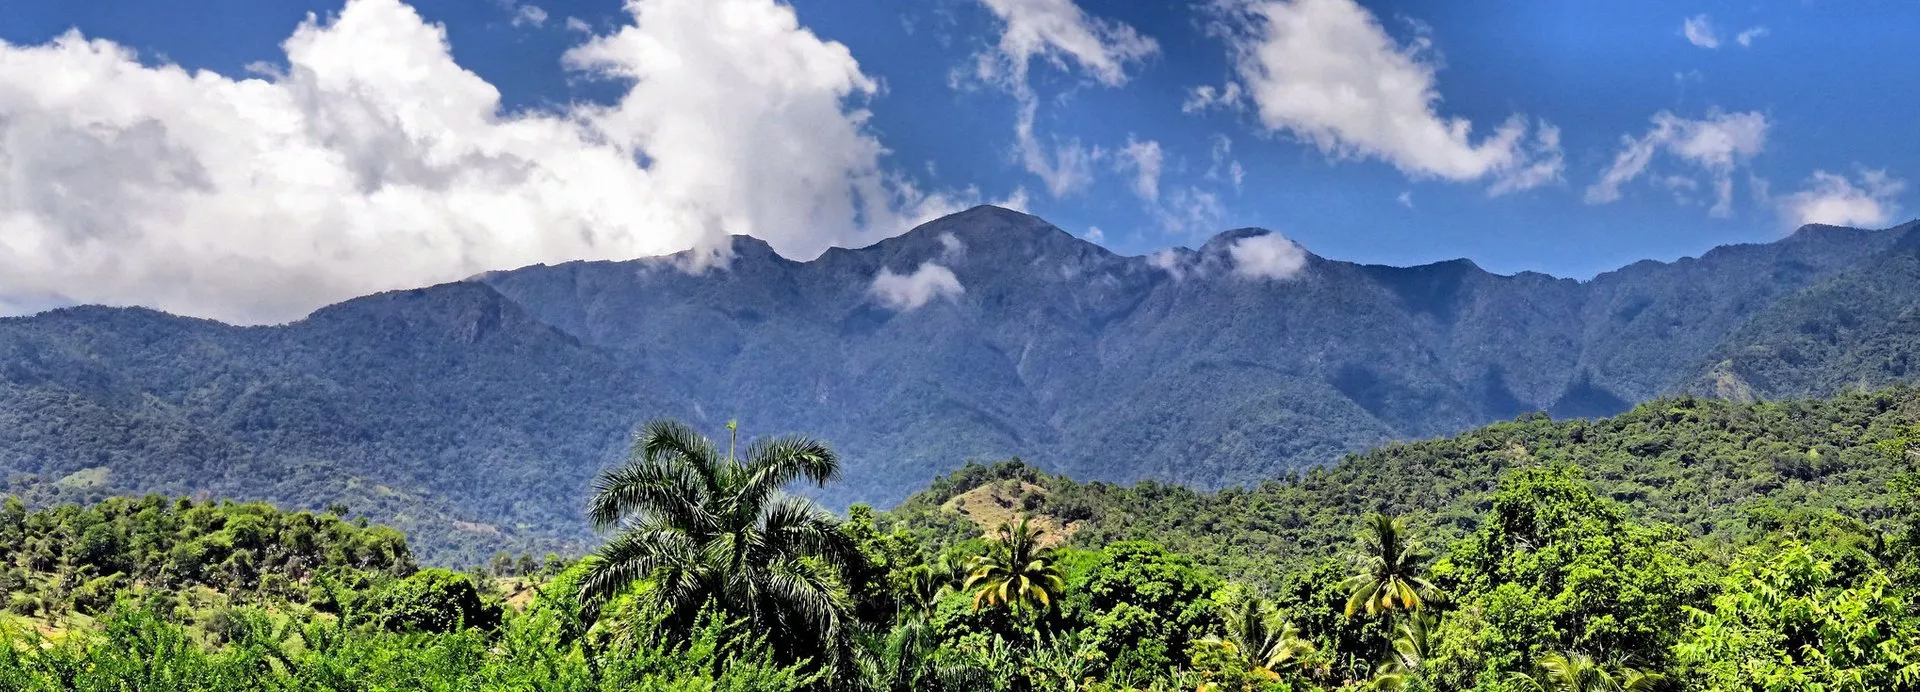 Pico Turquino in Cuba, Caribbean | Trekking & Hiking - Rated 0.8